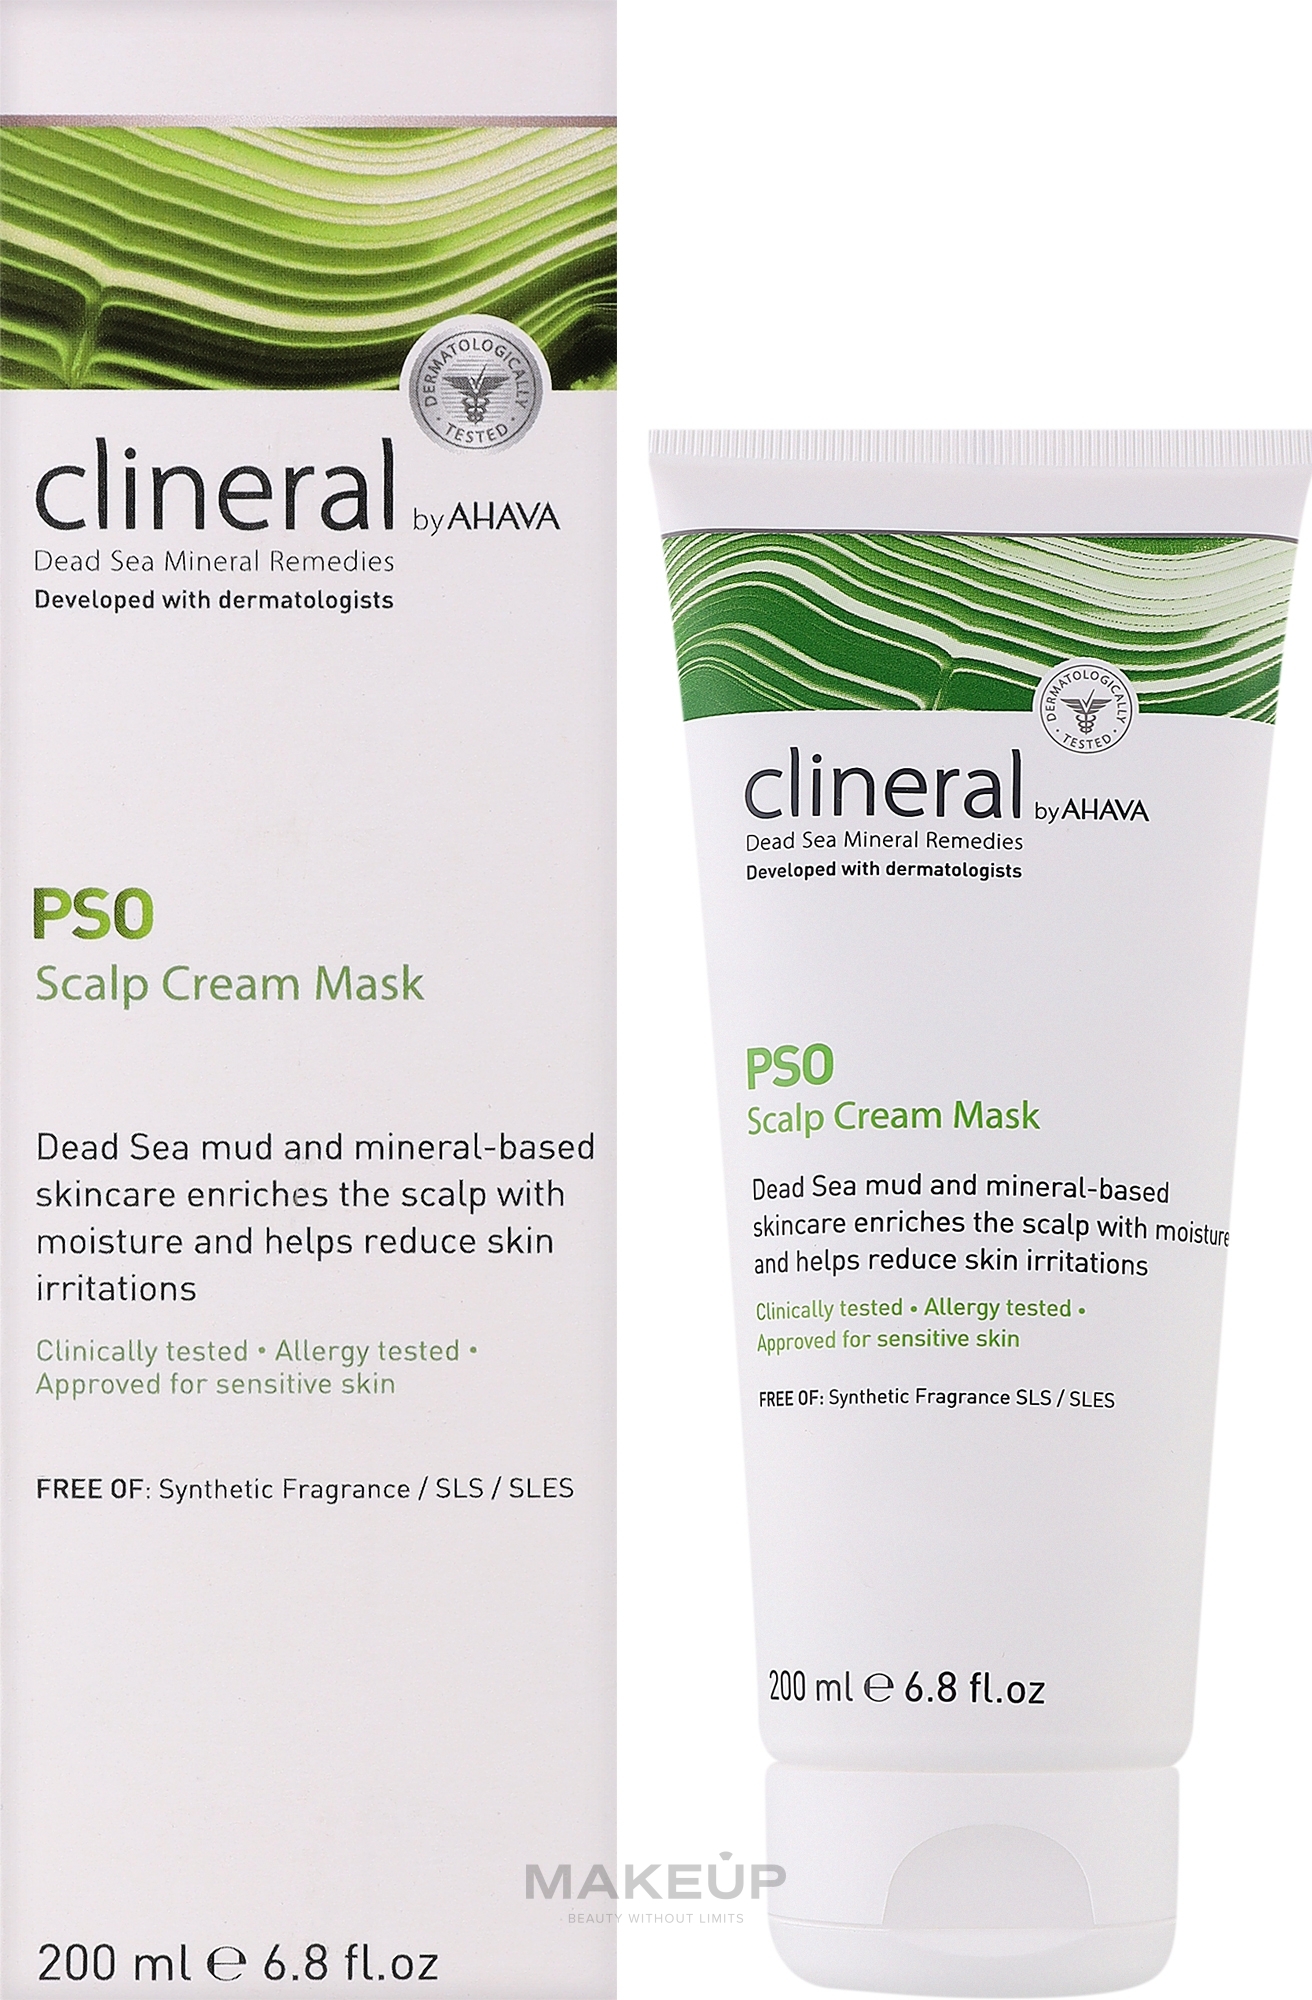 Kremowa maska do skóry głowy - Ahava Clineral Pso Scalp Cream Mask — Zdjęcie 200 ml